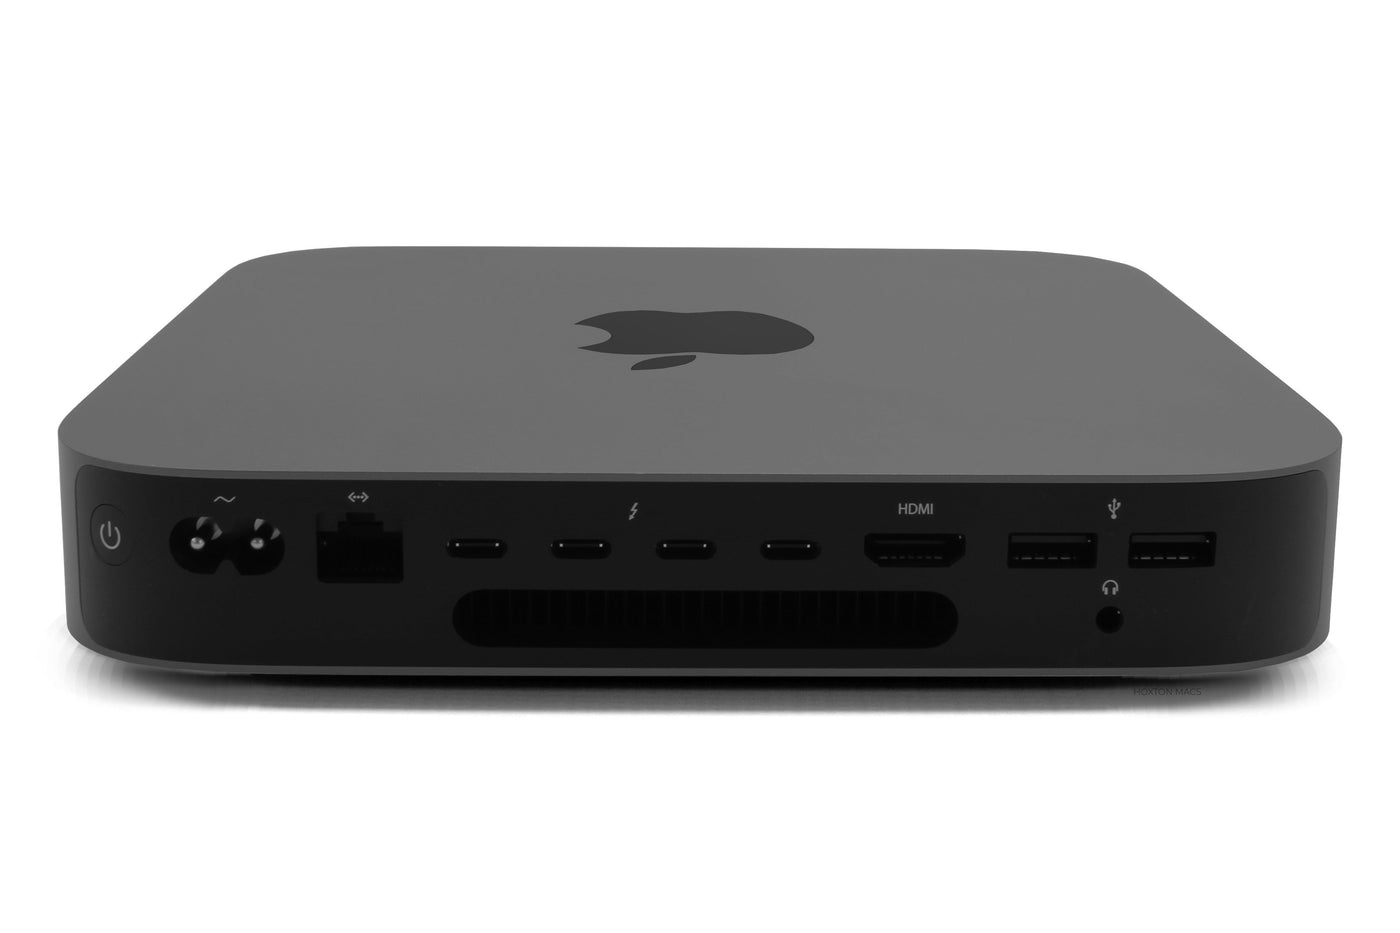 Apple Mac Mini Mac mini Core i3 3.6GHz (Late 2018) - Fair